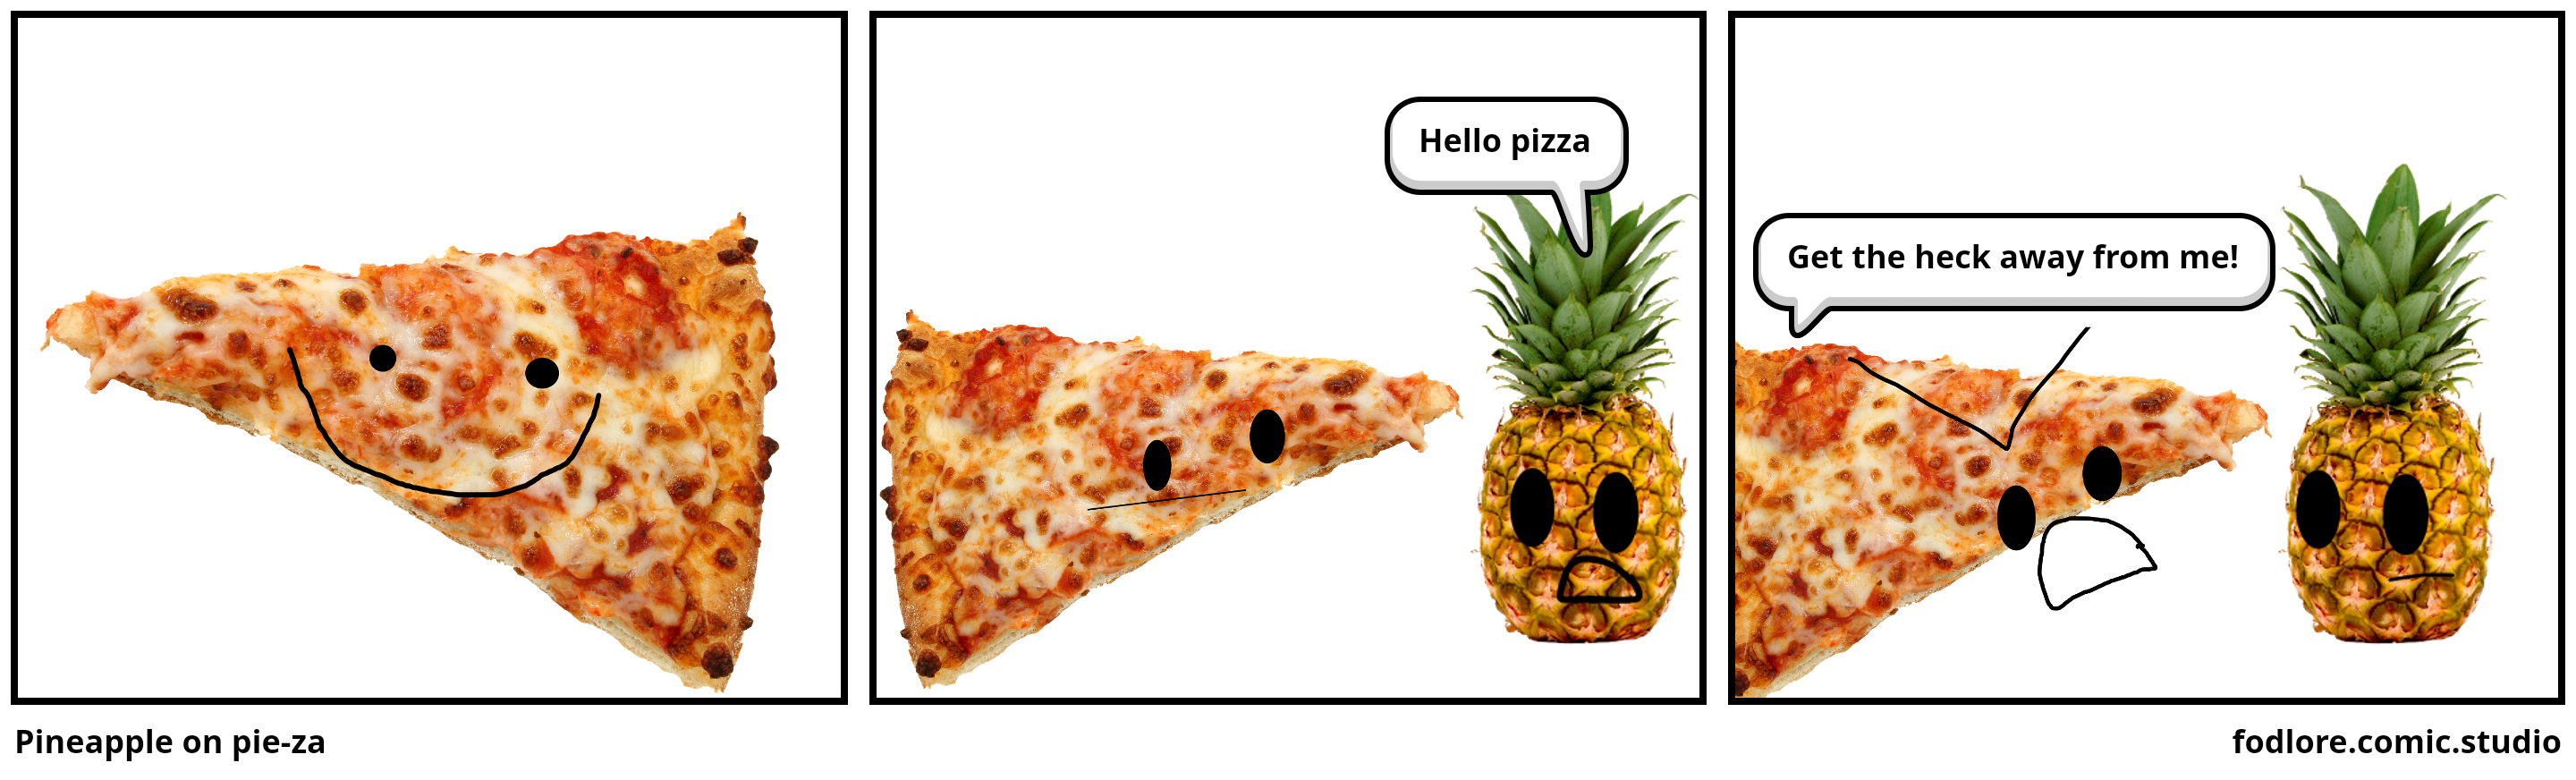 Pineapple on pie-za